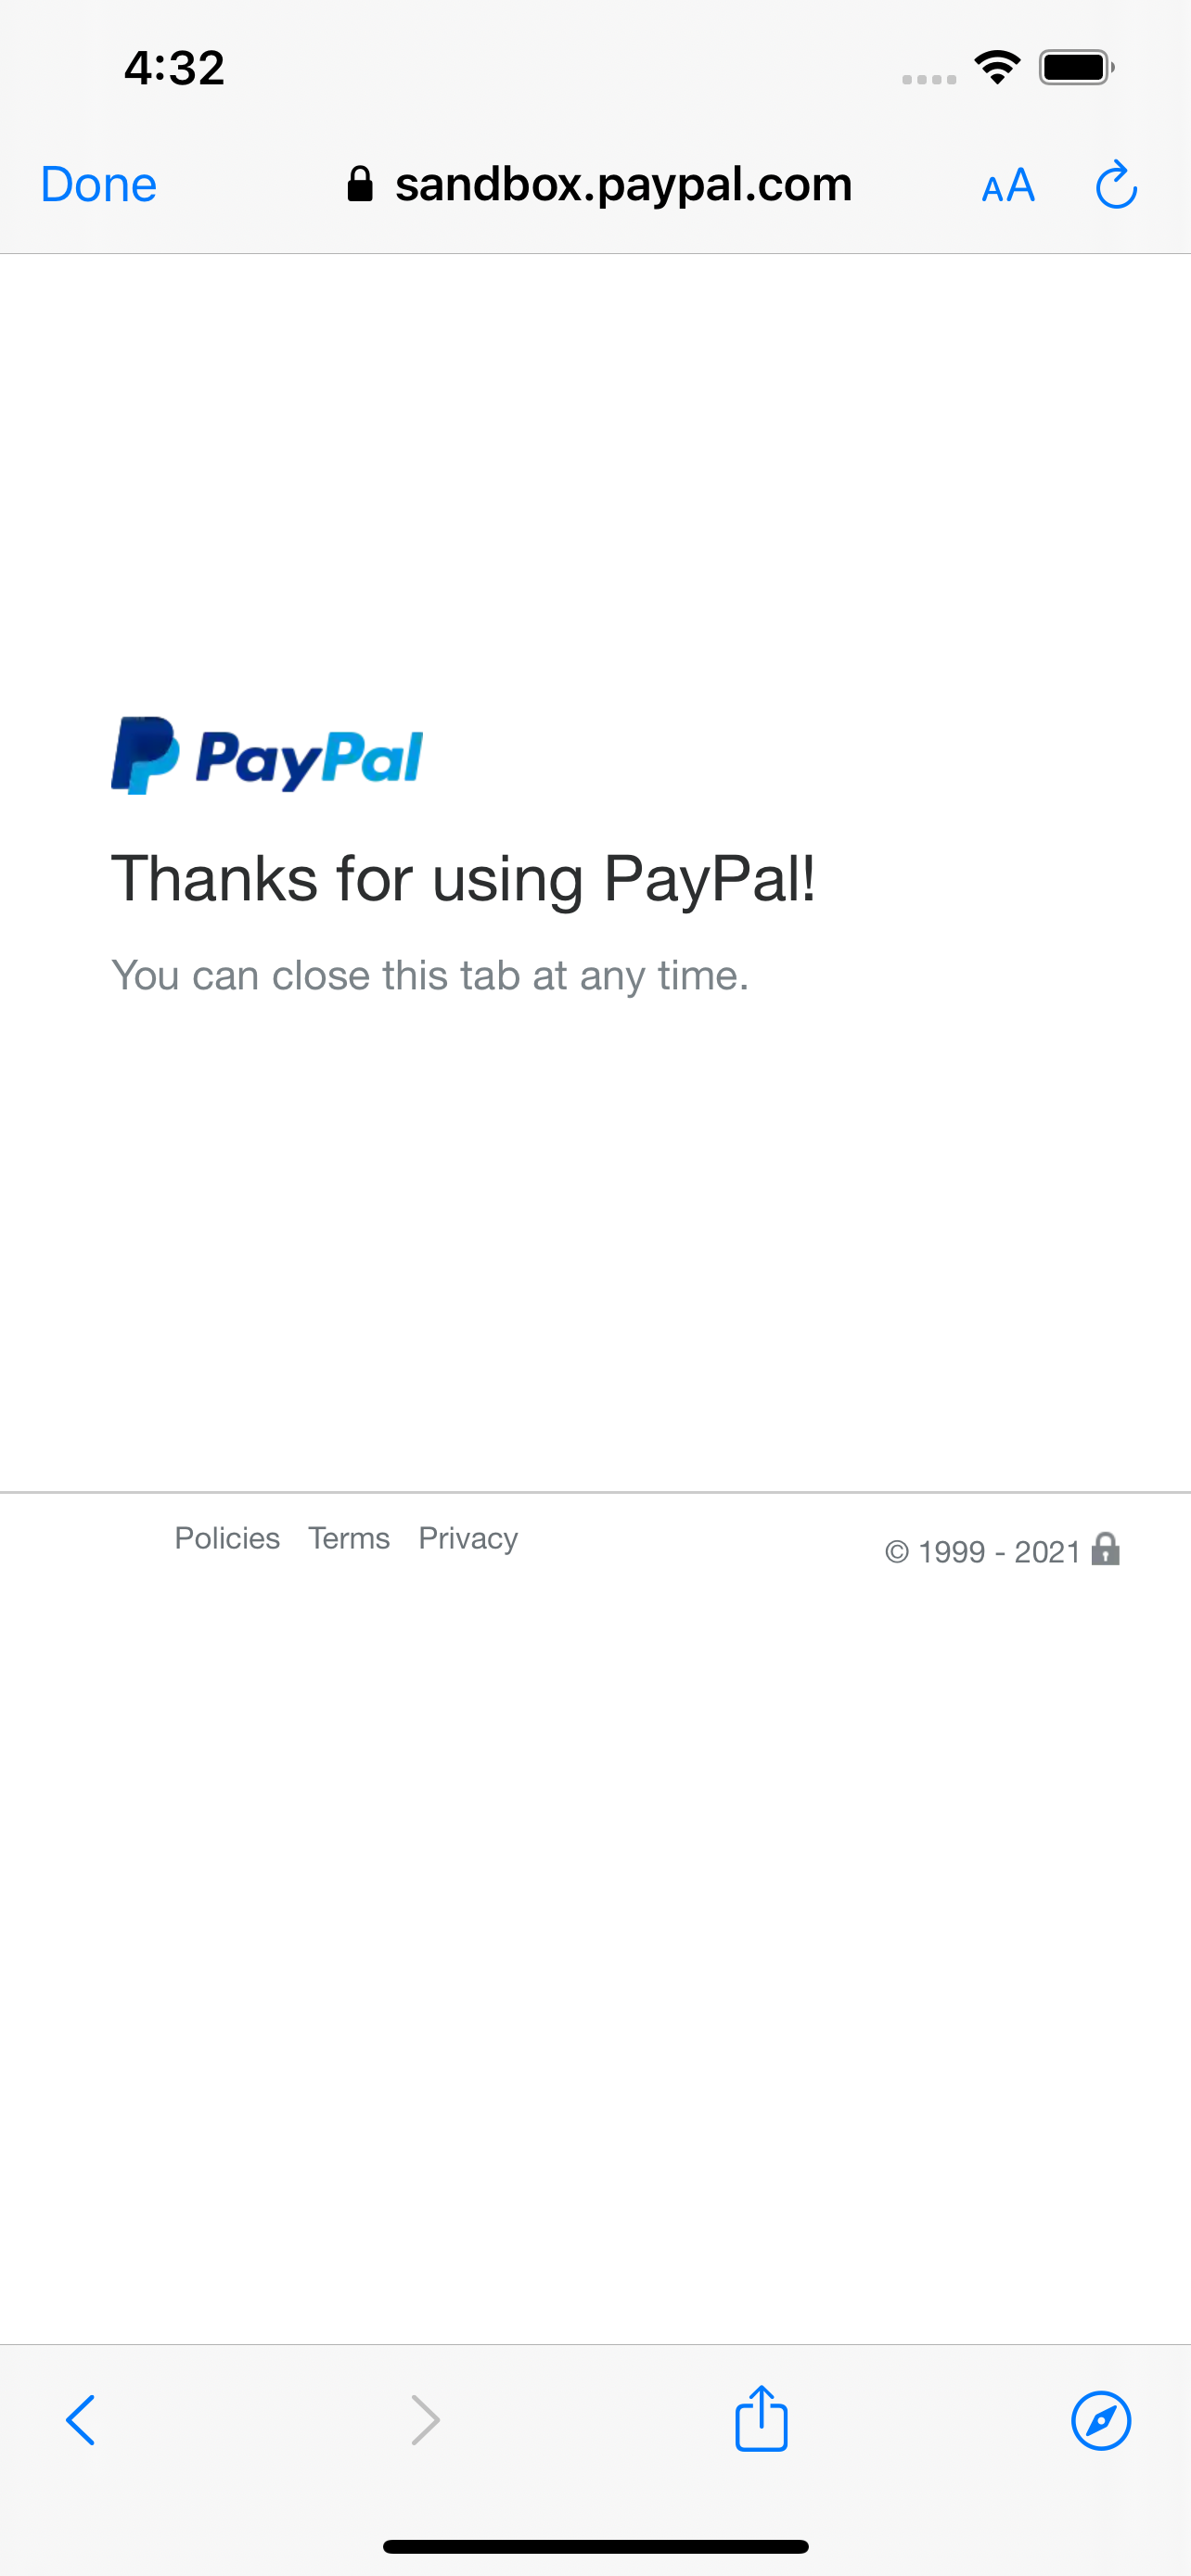 8 PayPal thanks